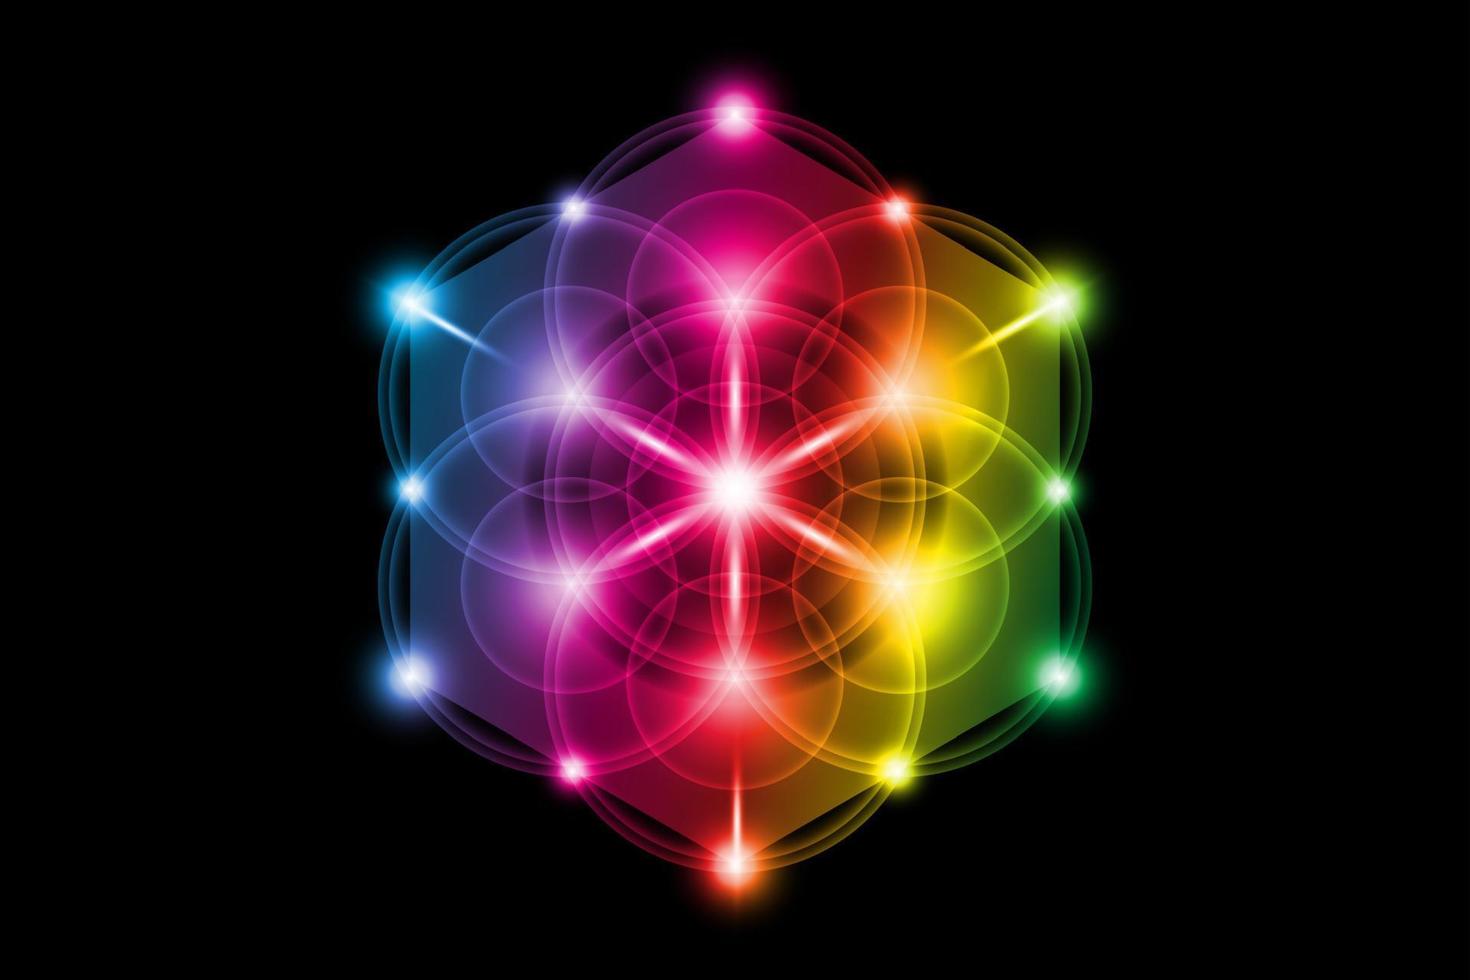 semente de vida, geometria sagrada, flor da vida, cubo de metatrons símbolo de logotipo de luz gradiente colorido de harmonia e equilíbrio, ornamento geométrico brilhante, vetor isolado em fundo preto